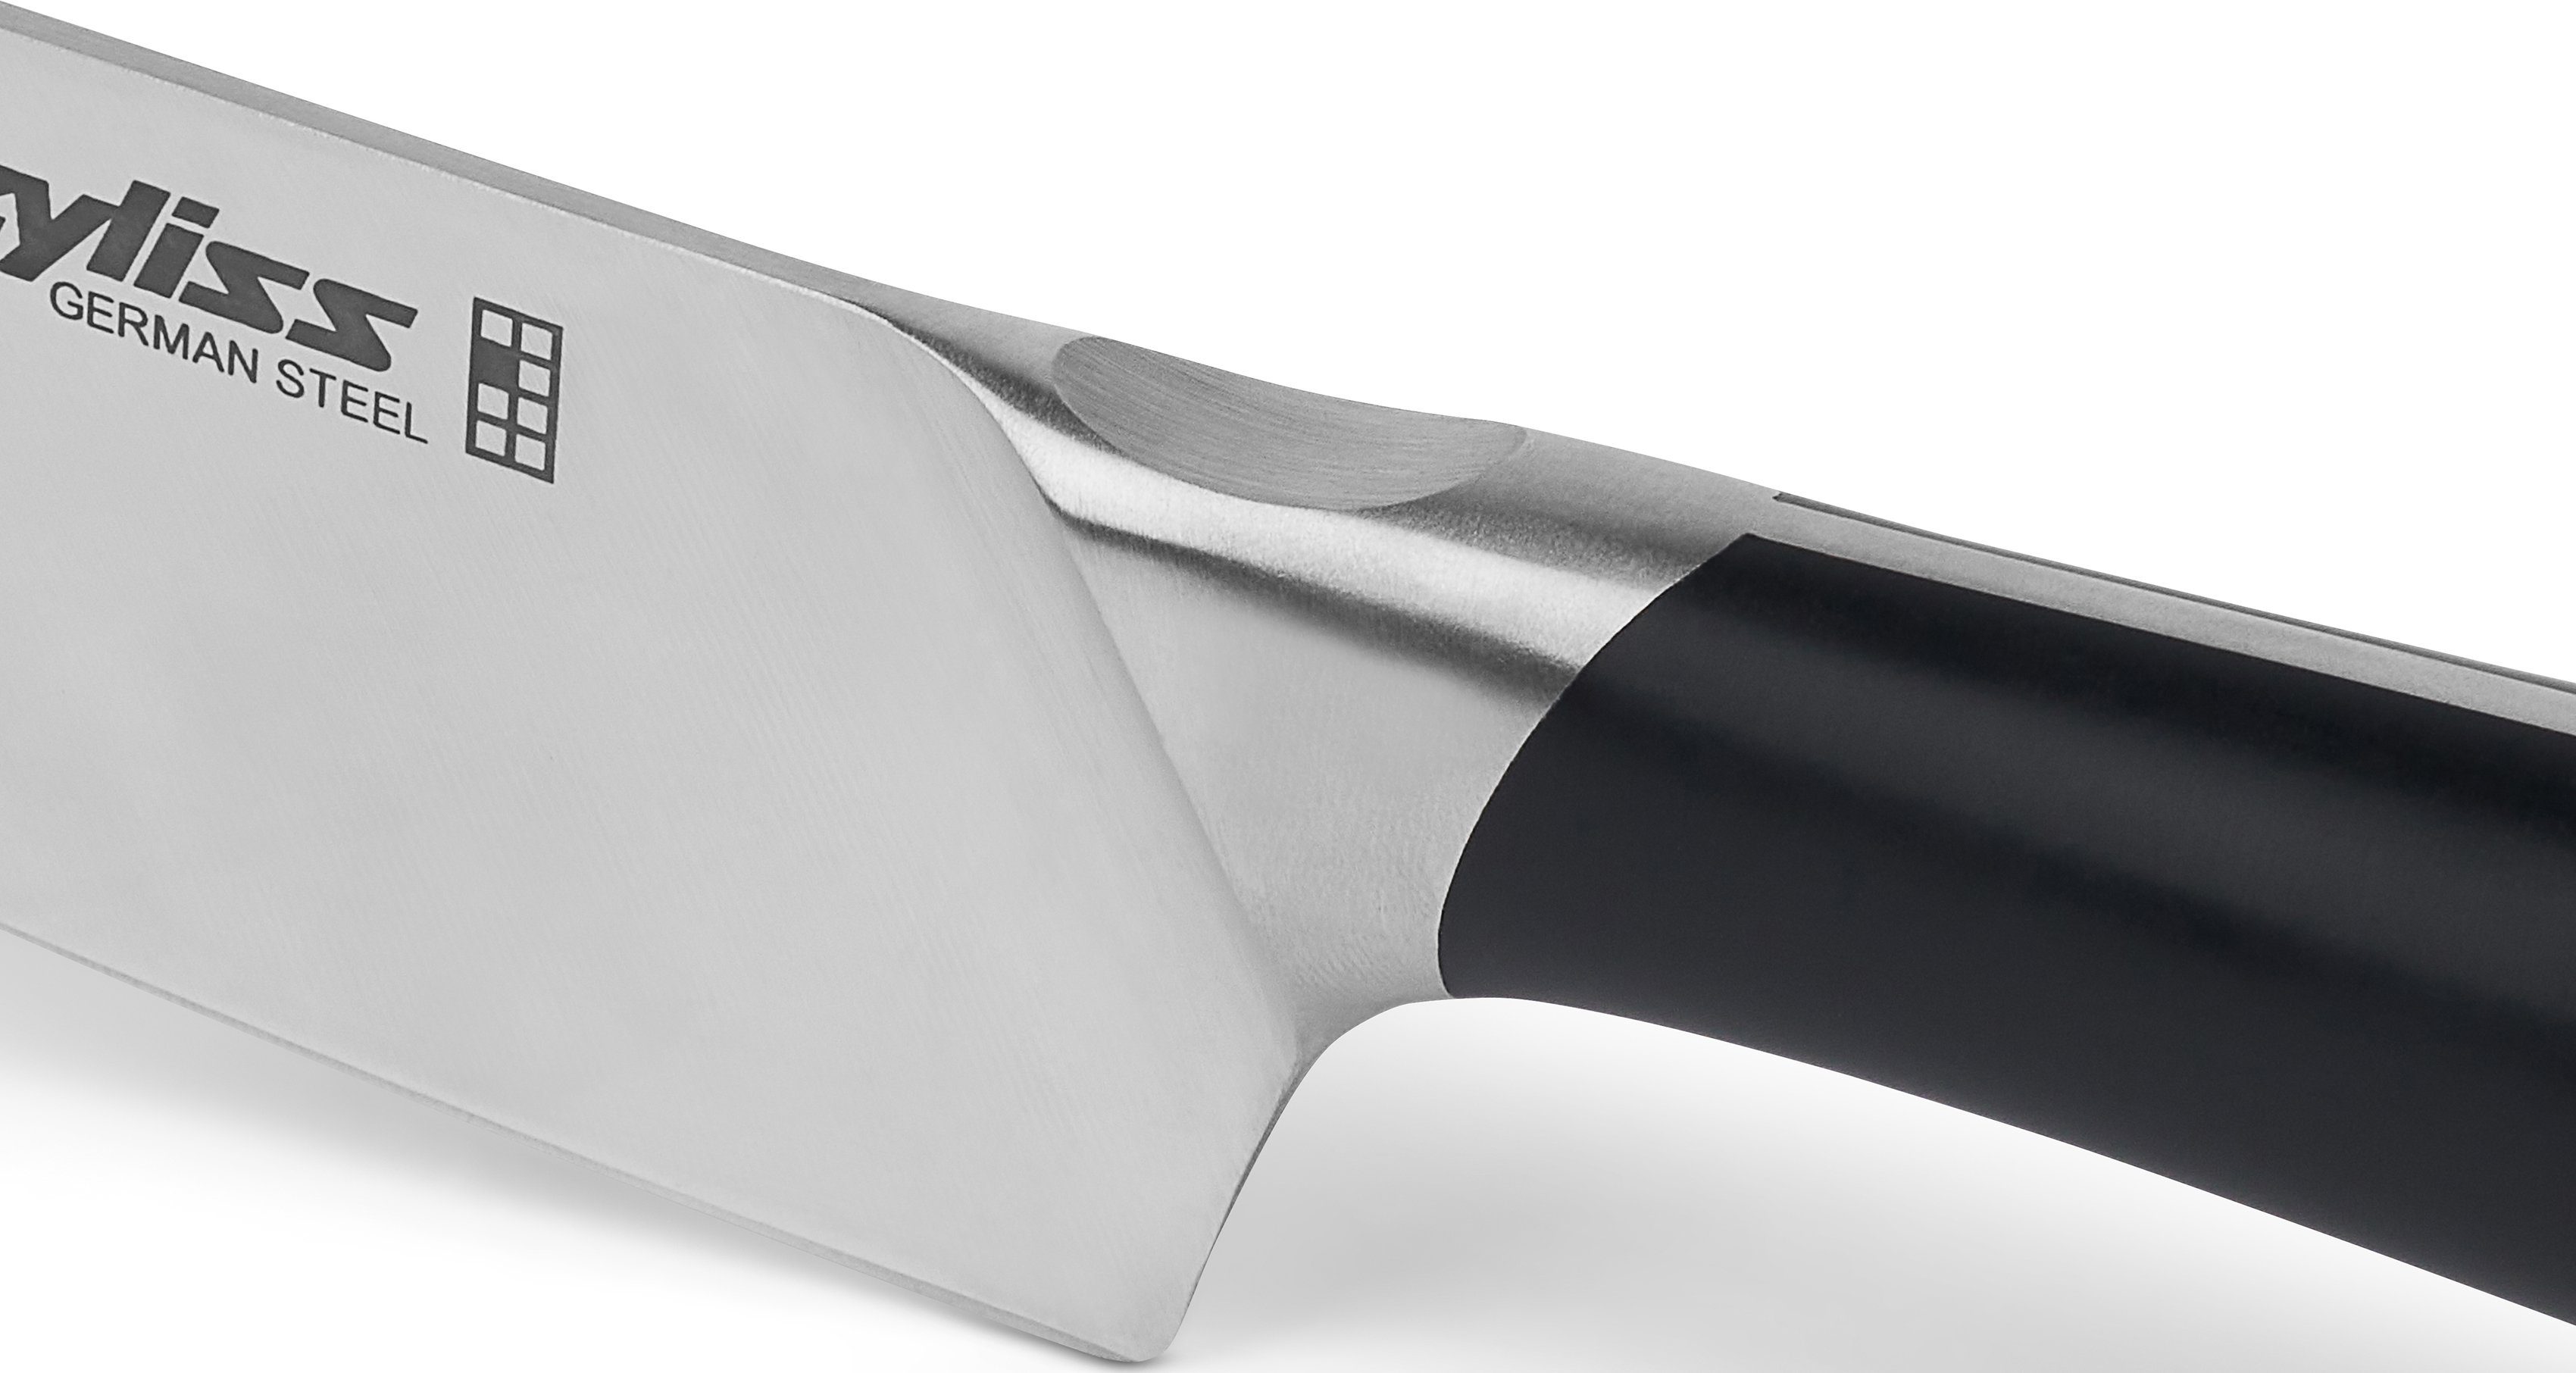 zyliss Messer-Set Comfort Pro (2-tlg), Edelstahl, geformt ergonomisch langlebig, Deutscher